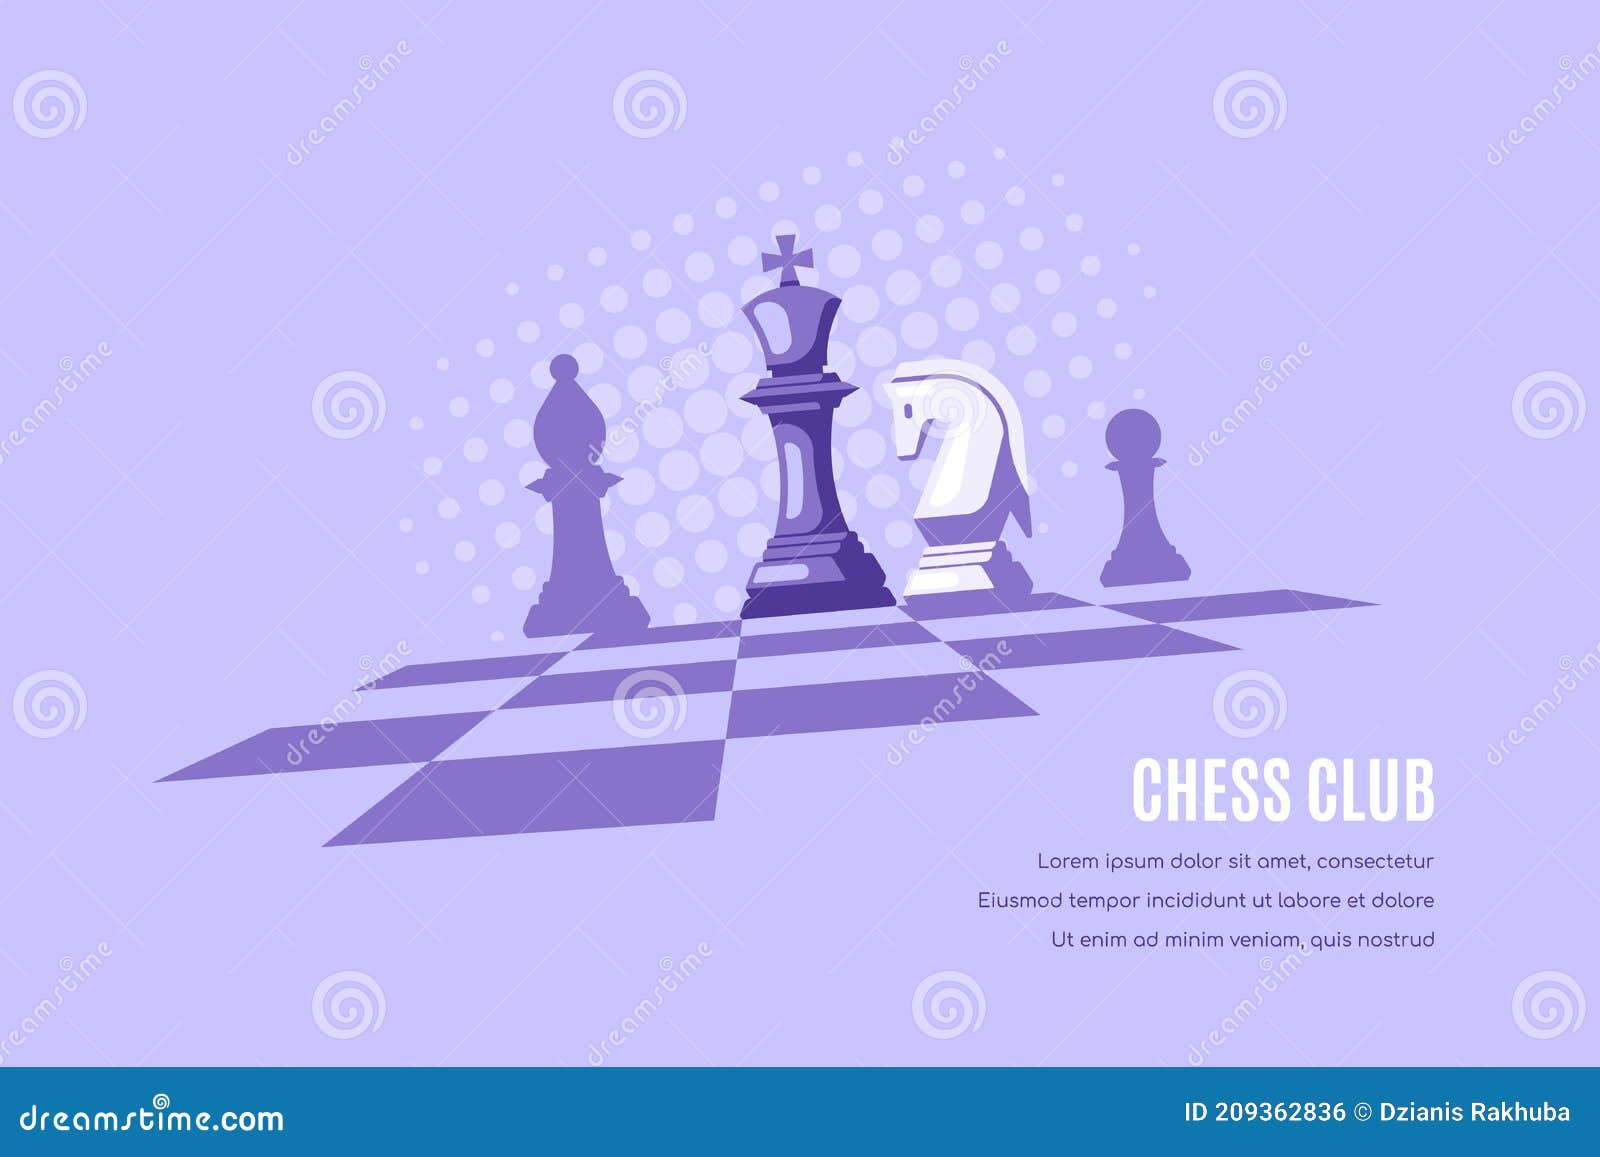 Emblema do clube de xadrez. jogo de xadrez, logotipo do torneio de xadrez,  peças de xadrez de rei, rainha, bispo e torre